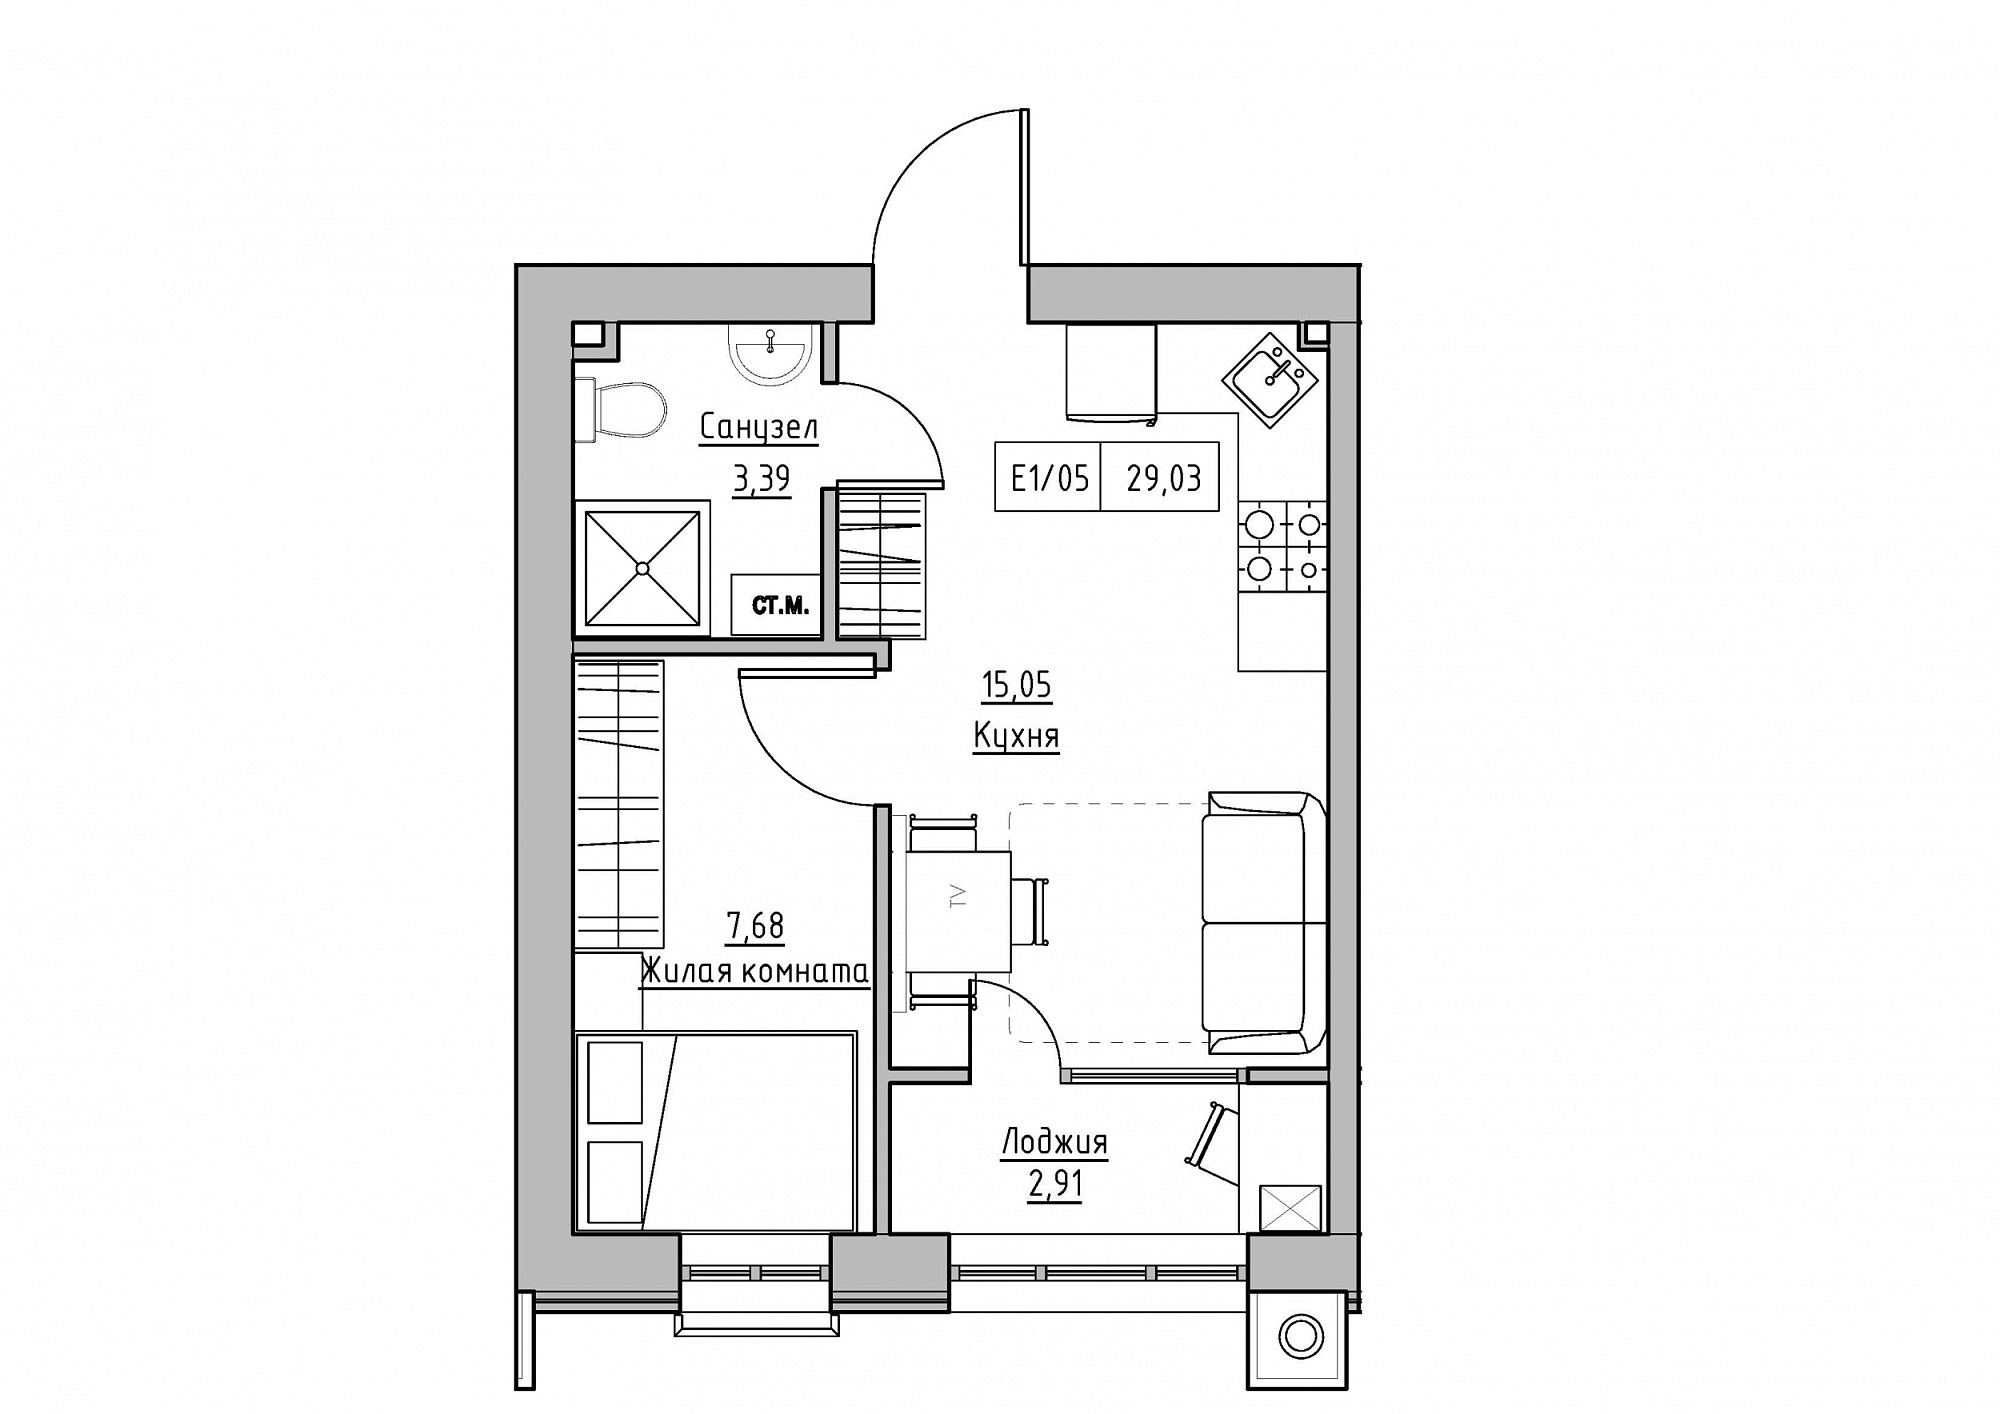 Planning 1-rm flats area 29.03m2, KS-012-04/0007.